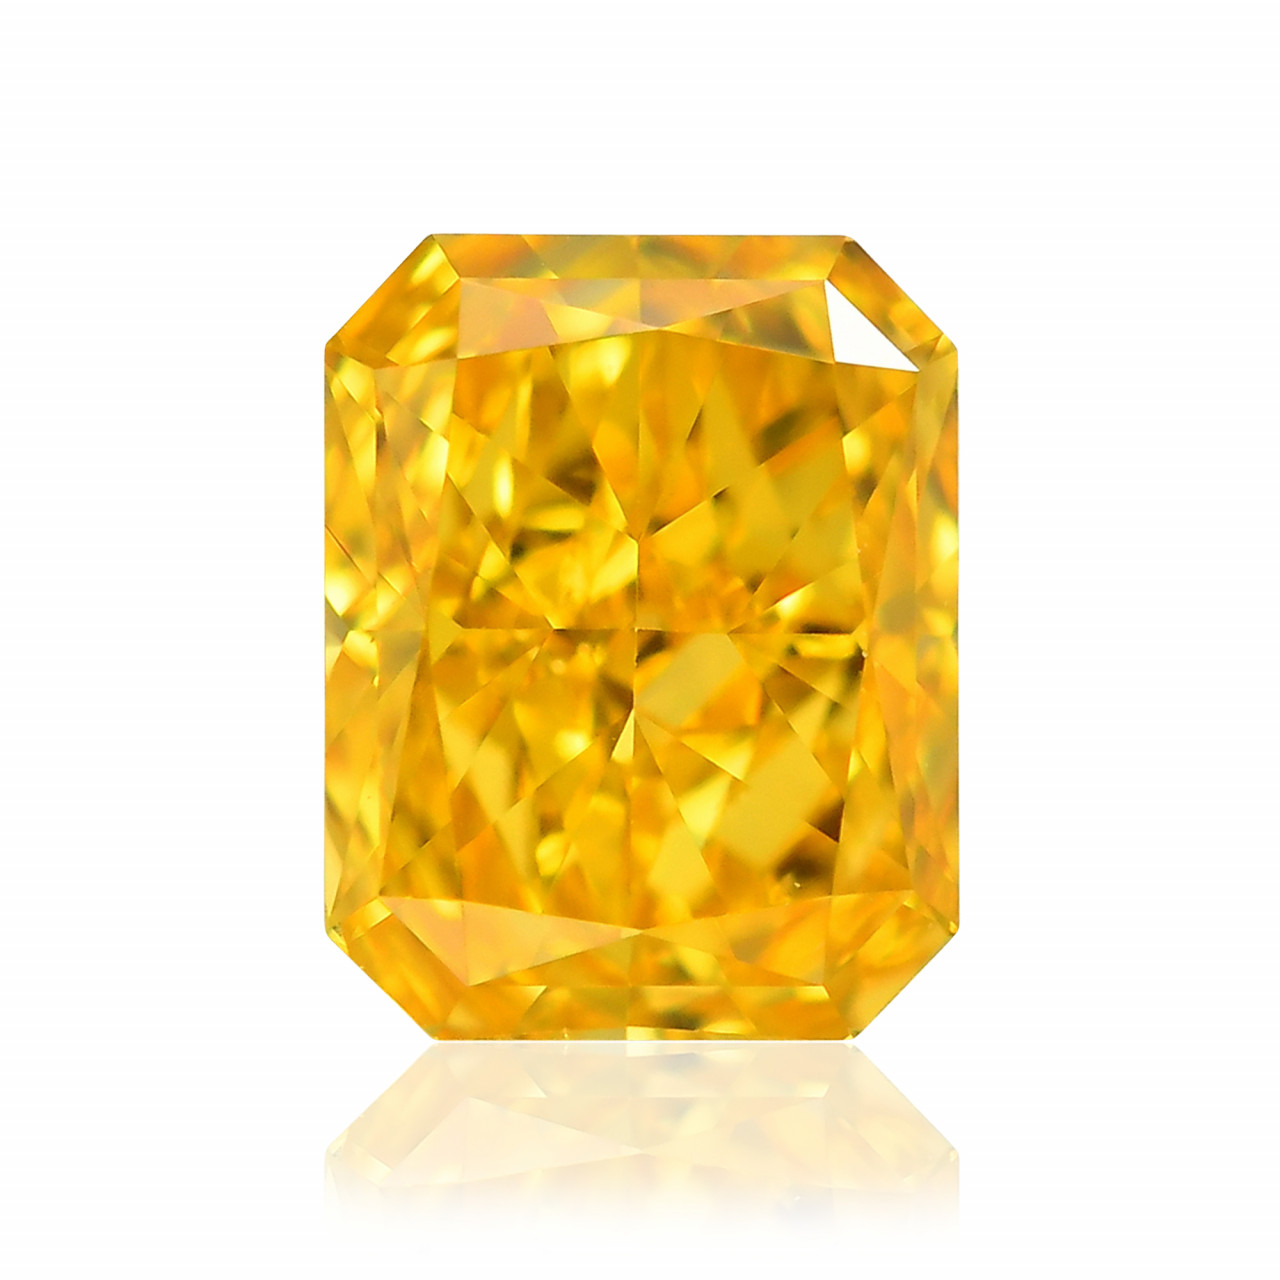 0.39 carat, Fancy Vivid Orangy Yellow Diamond, Radiant Shape, VS1